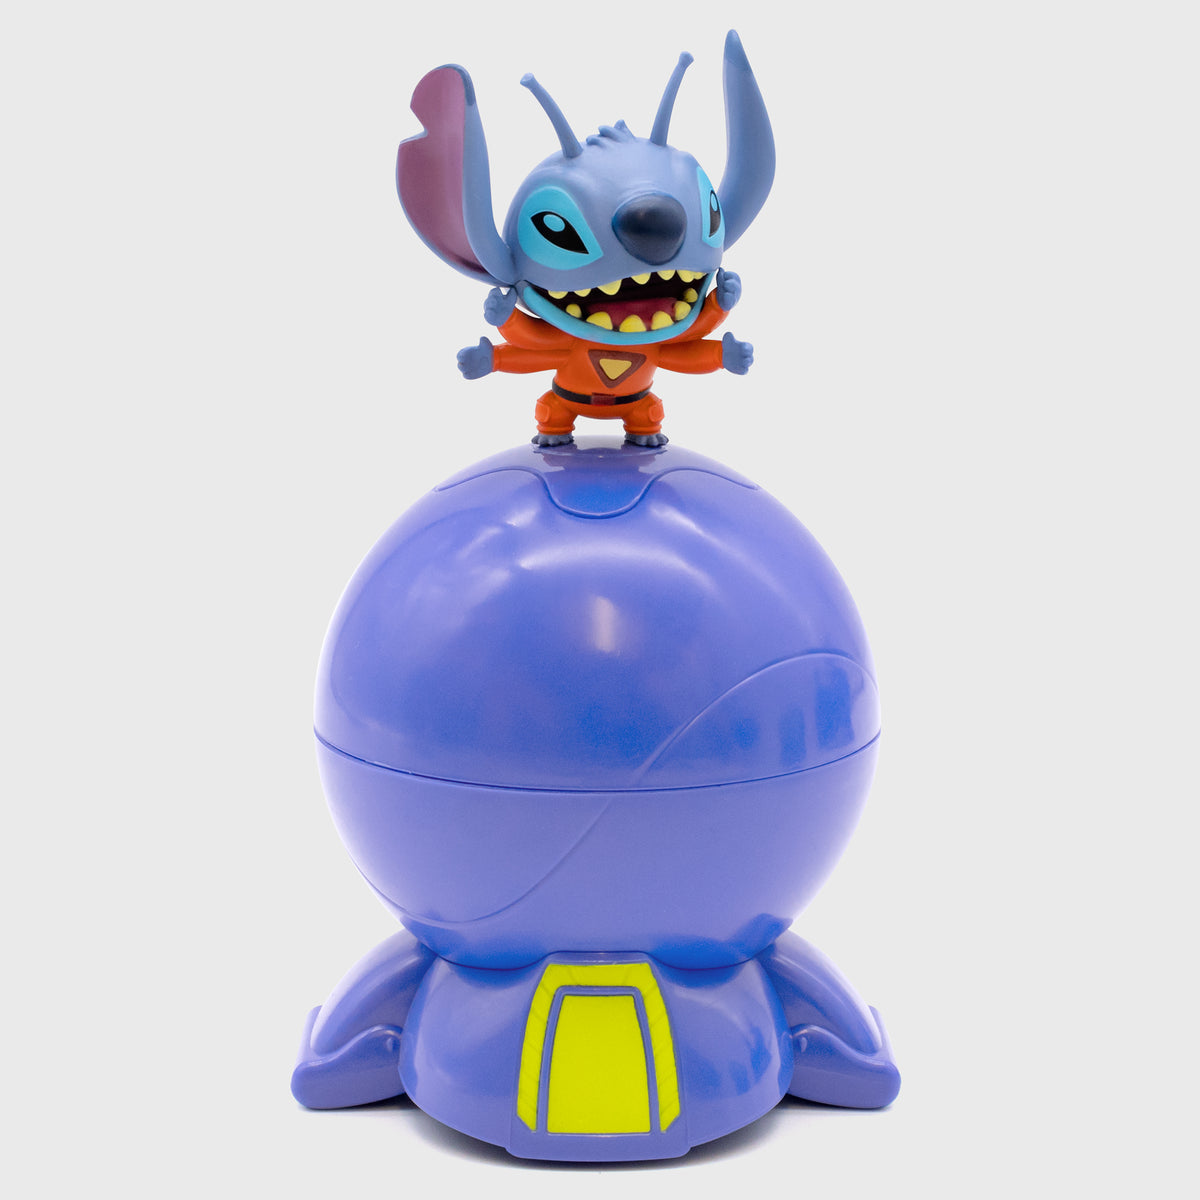 Disney Stitch Collectible Mini Figures Assortment – JAC Stores IOM